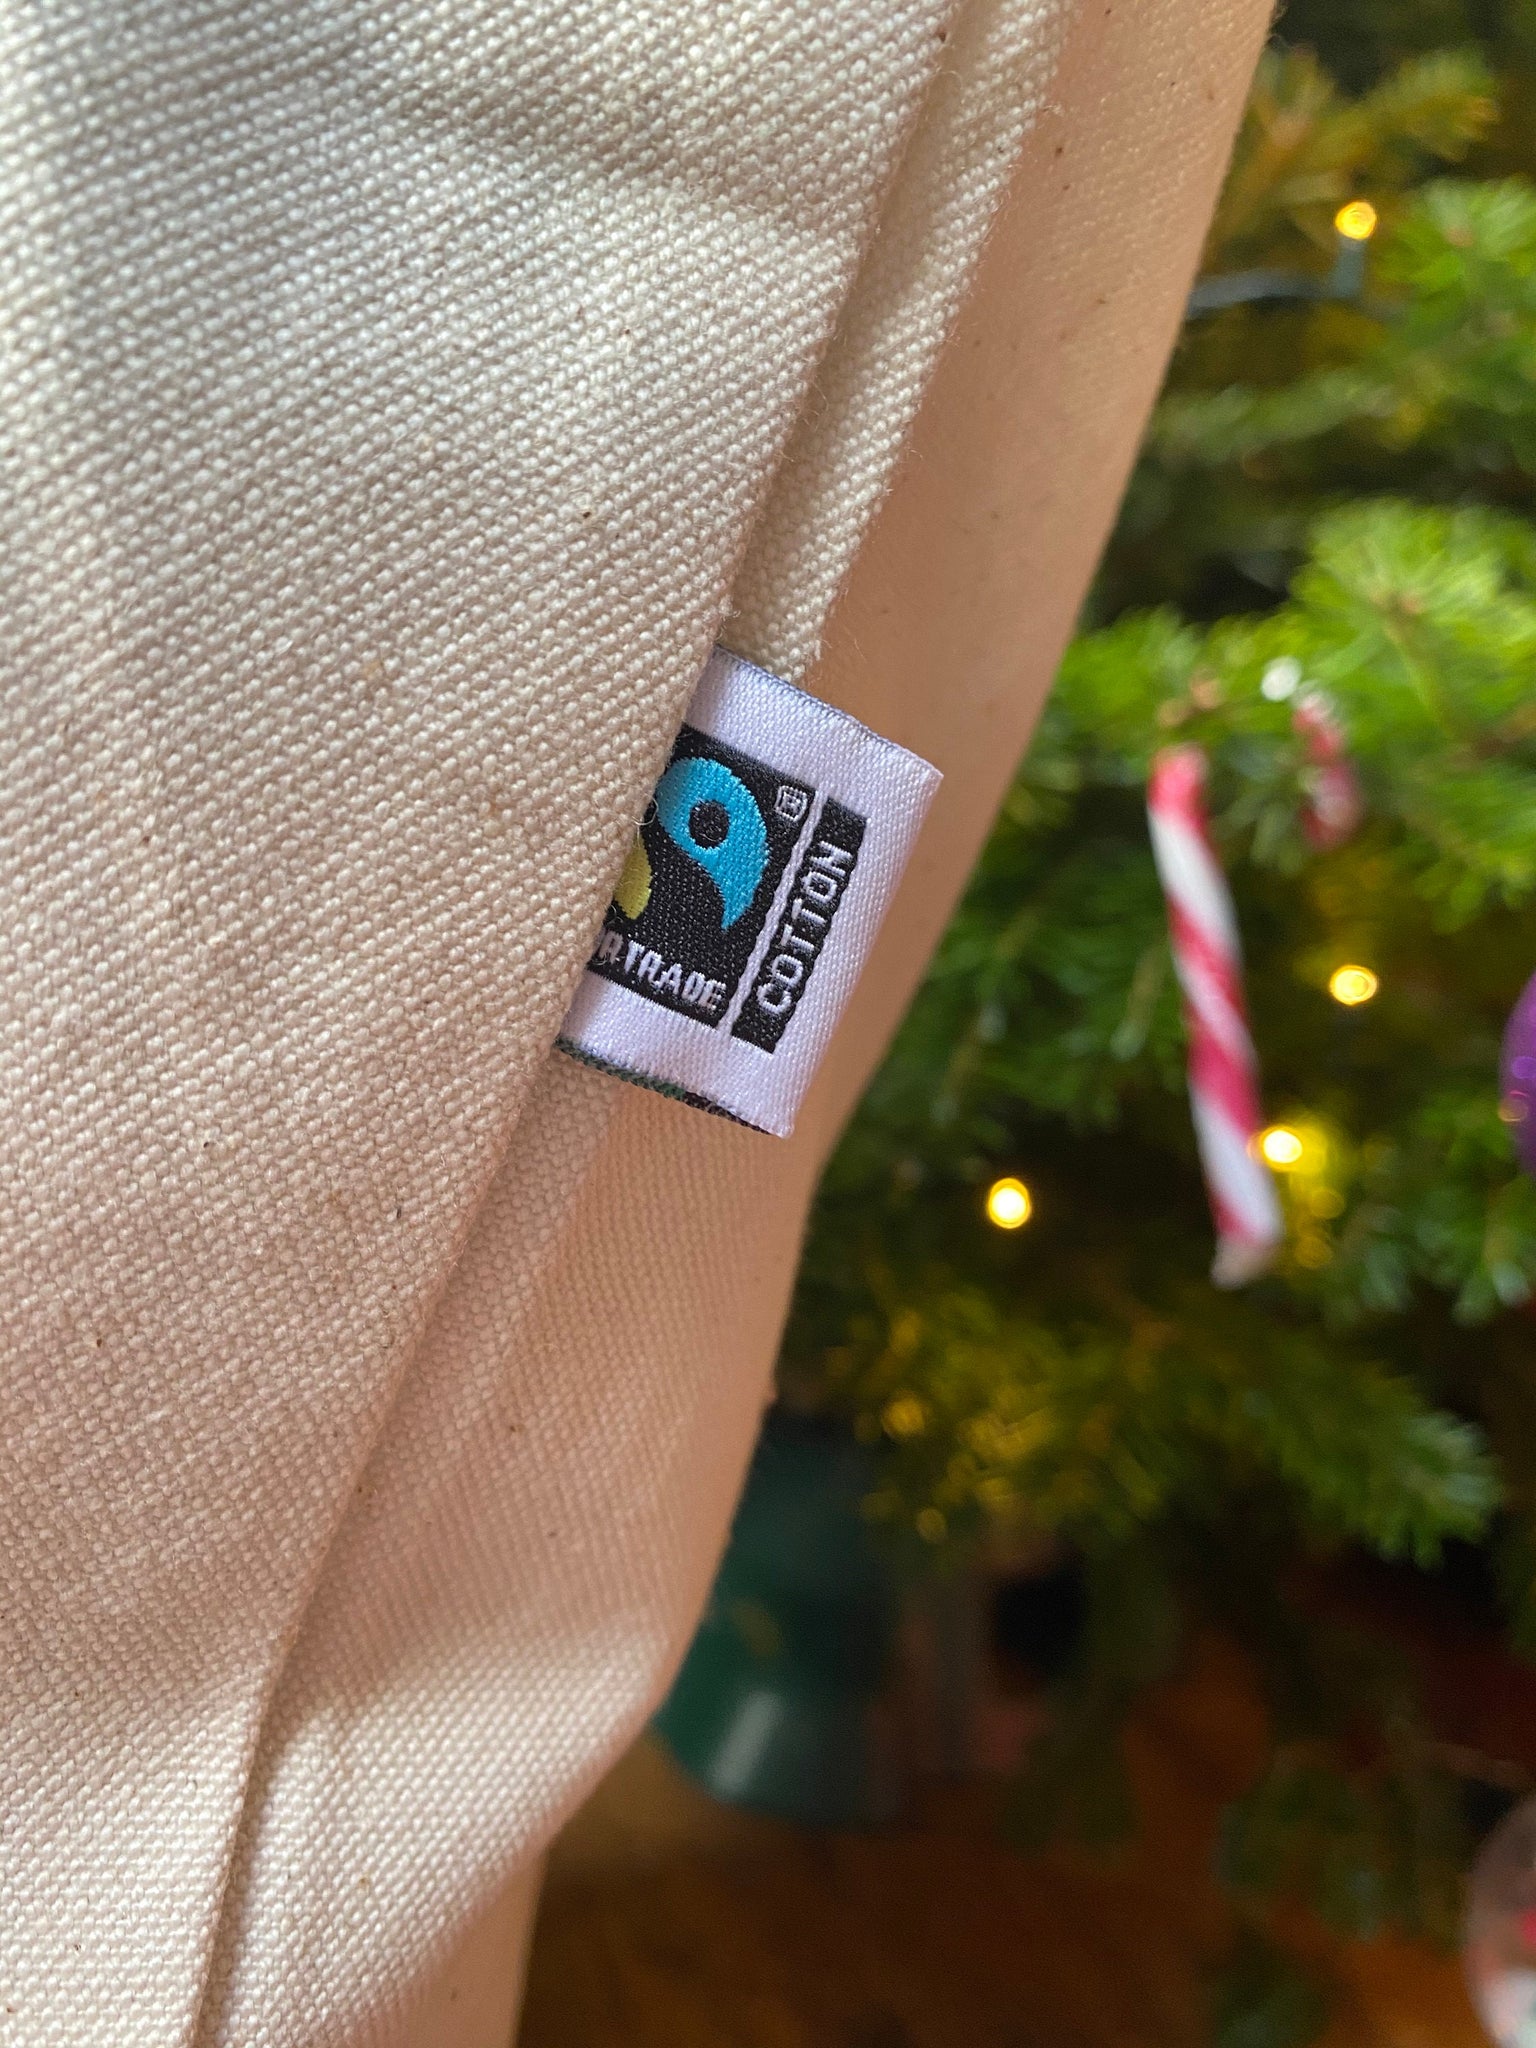 Bag Of Cans Fairtrade 100% Organic Cotton Tote Bag